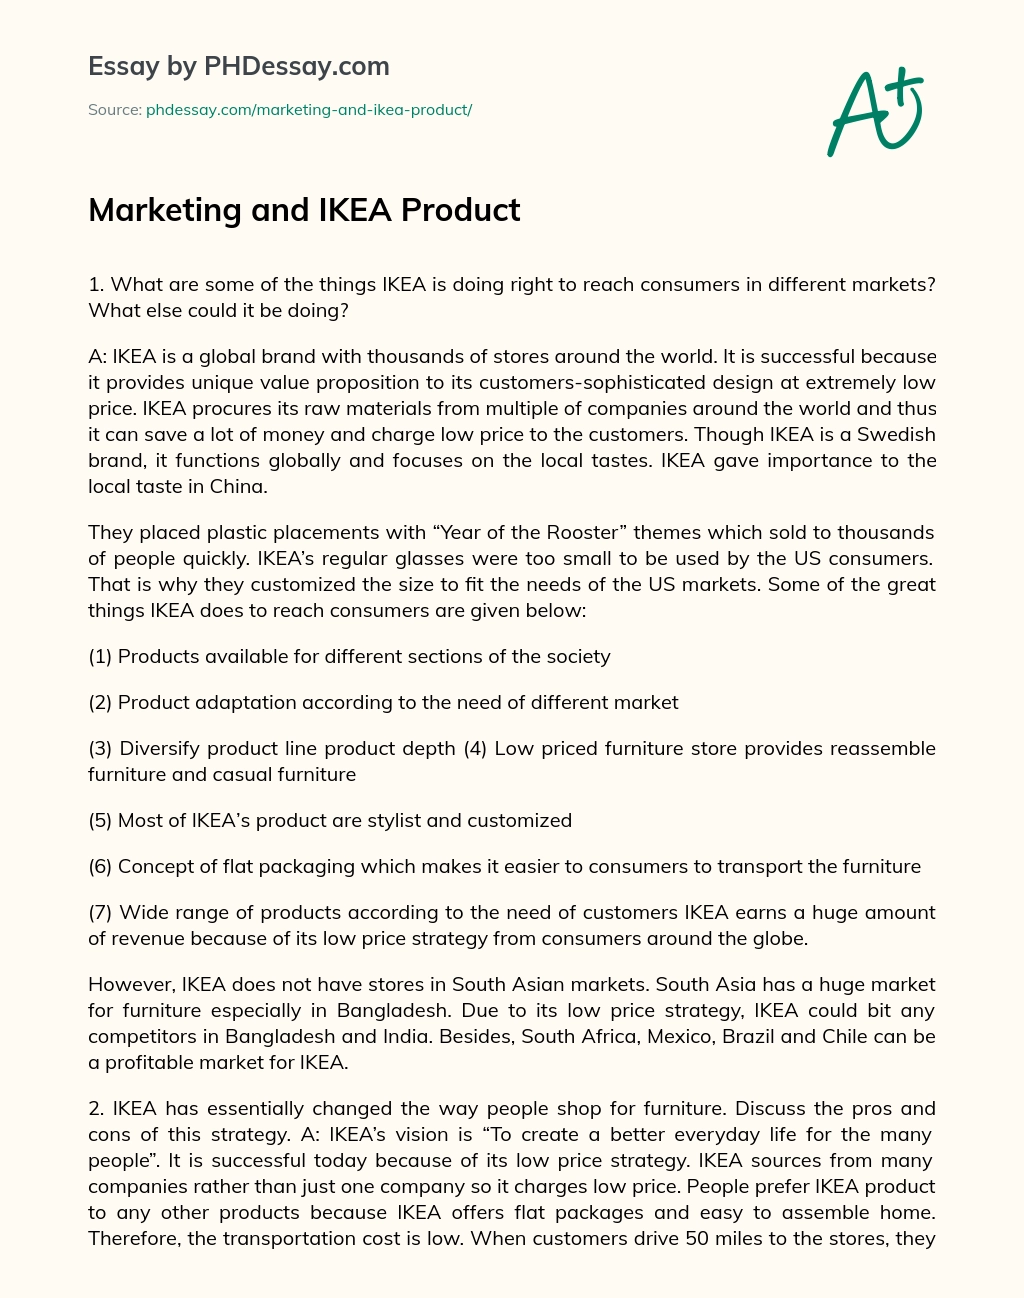 Marketing and IKEA Product essay